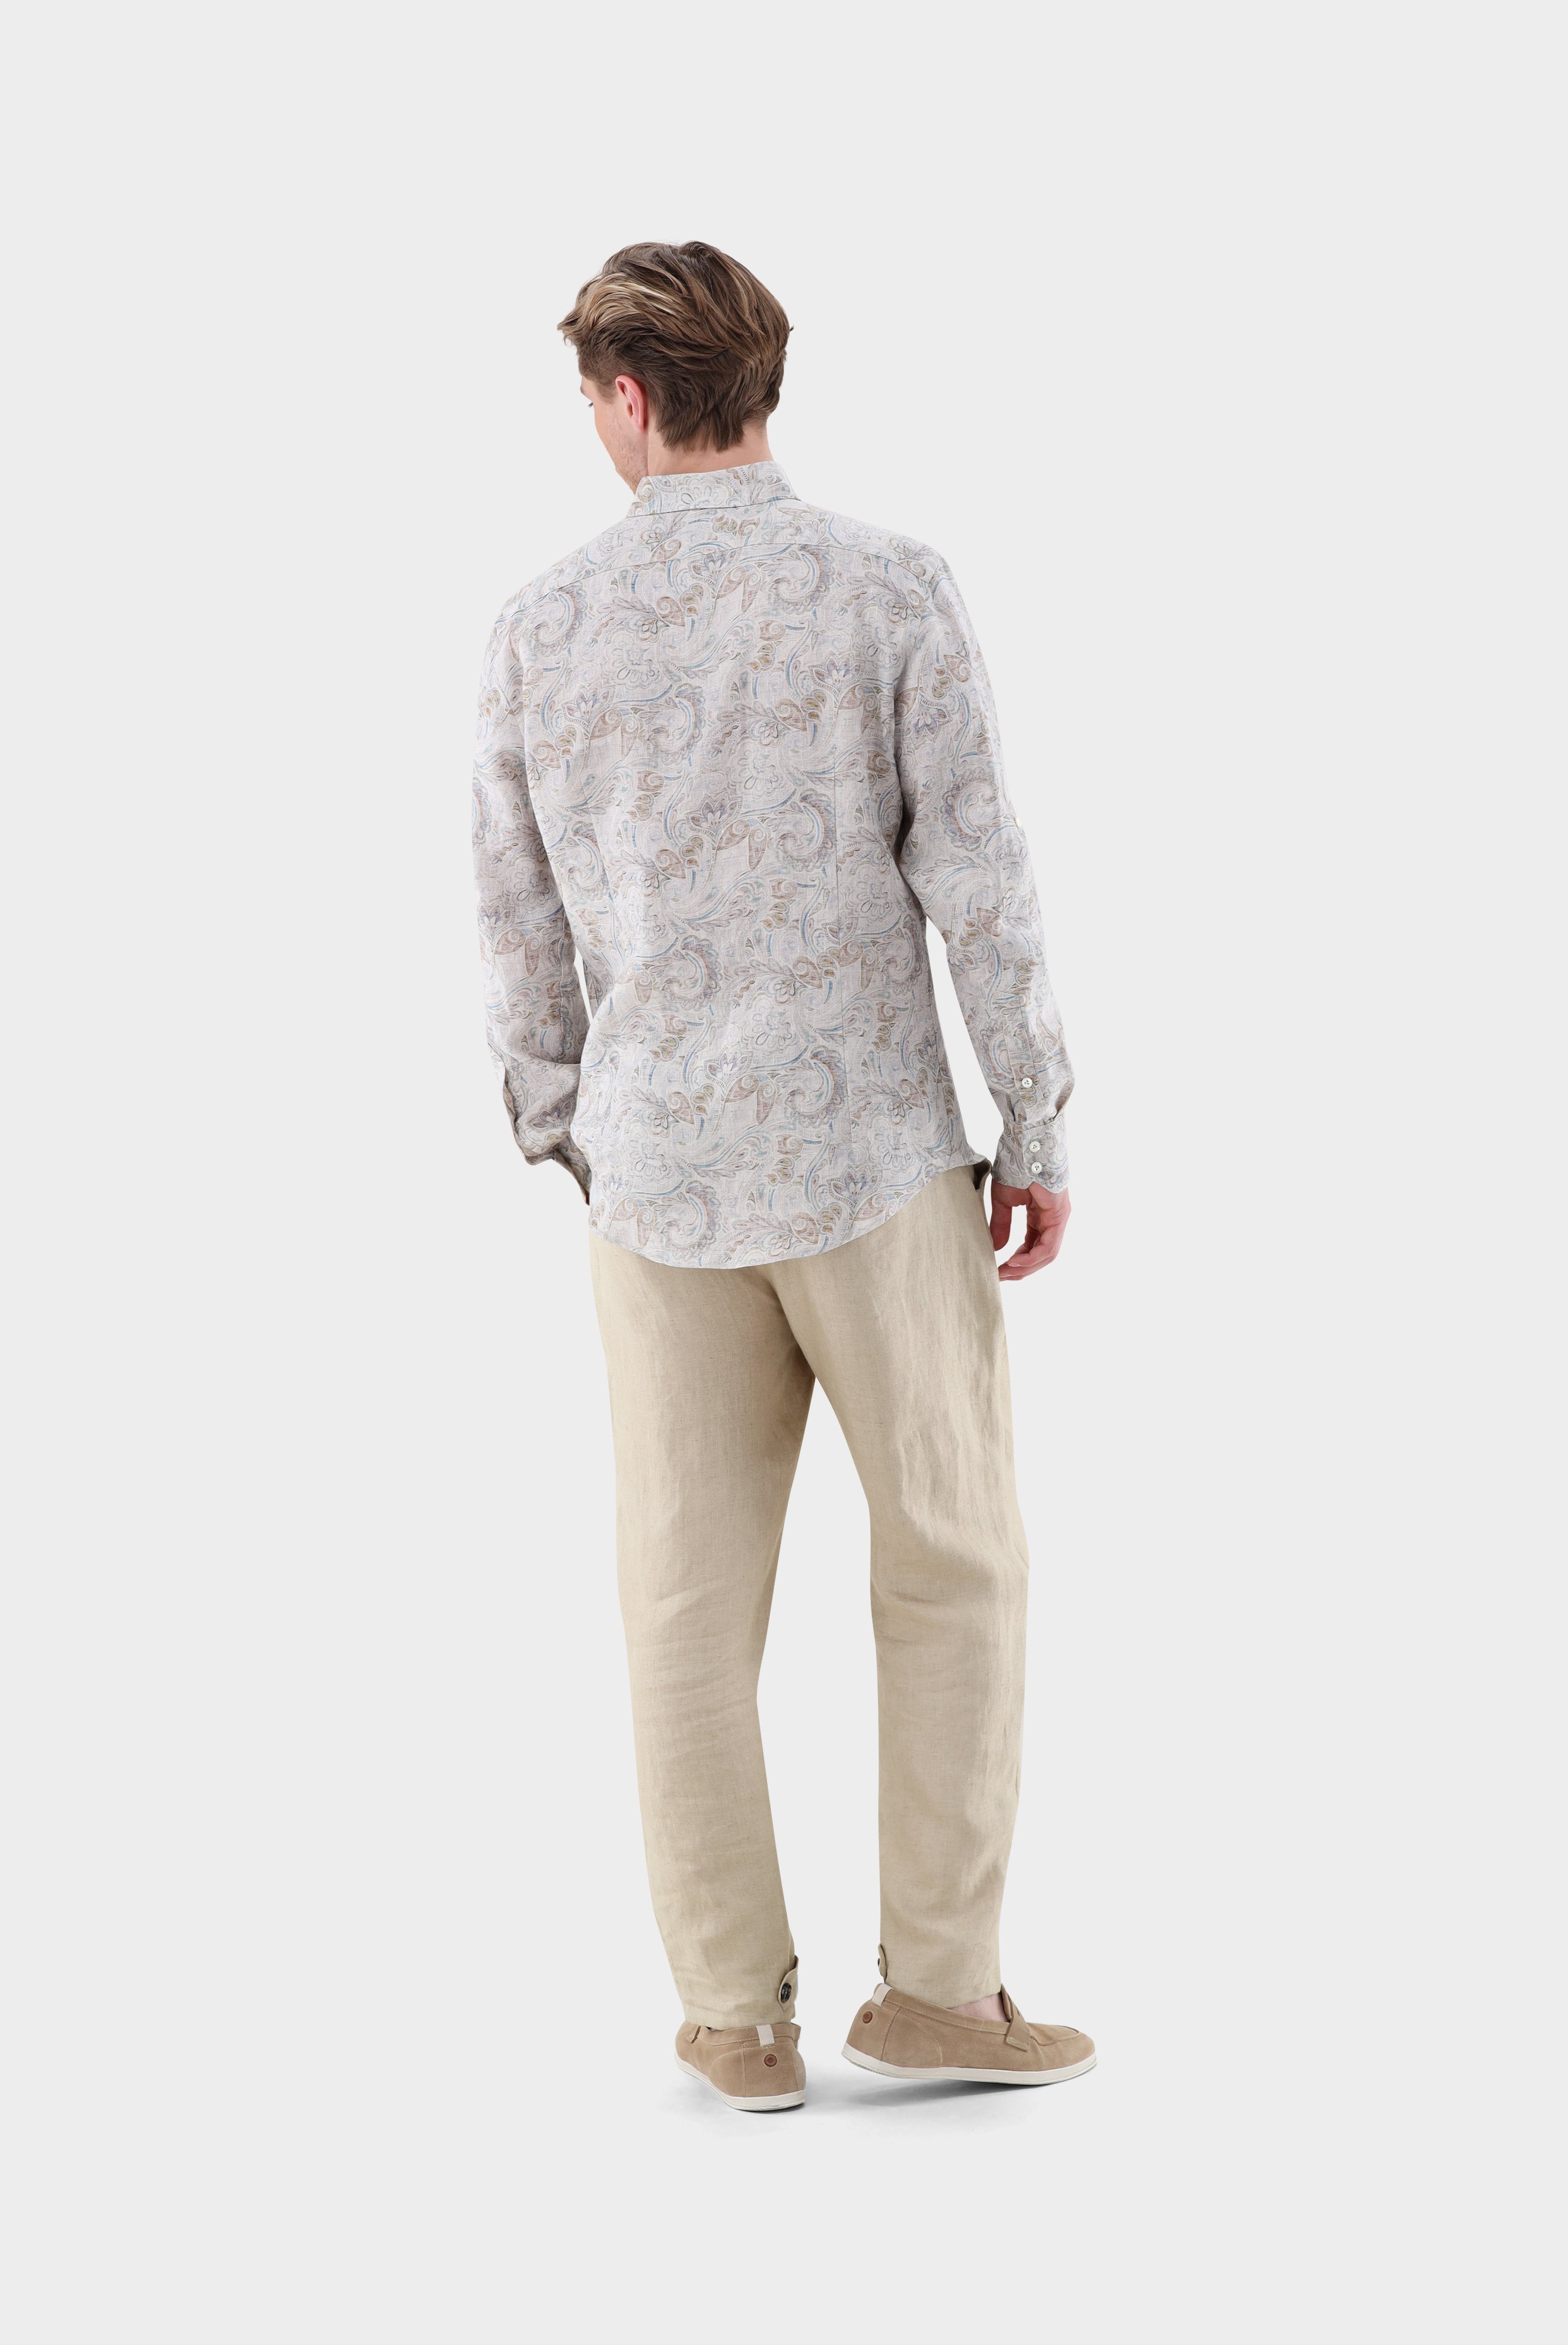 Casual Hemden+Leinenhemd mit Paisley-Druck Tailor Fit+20.2013.C4.172036.118.38